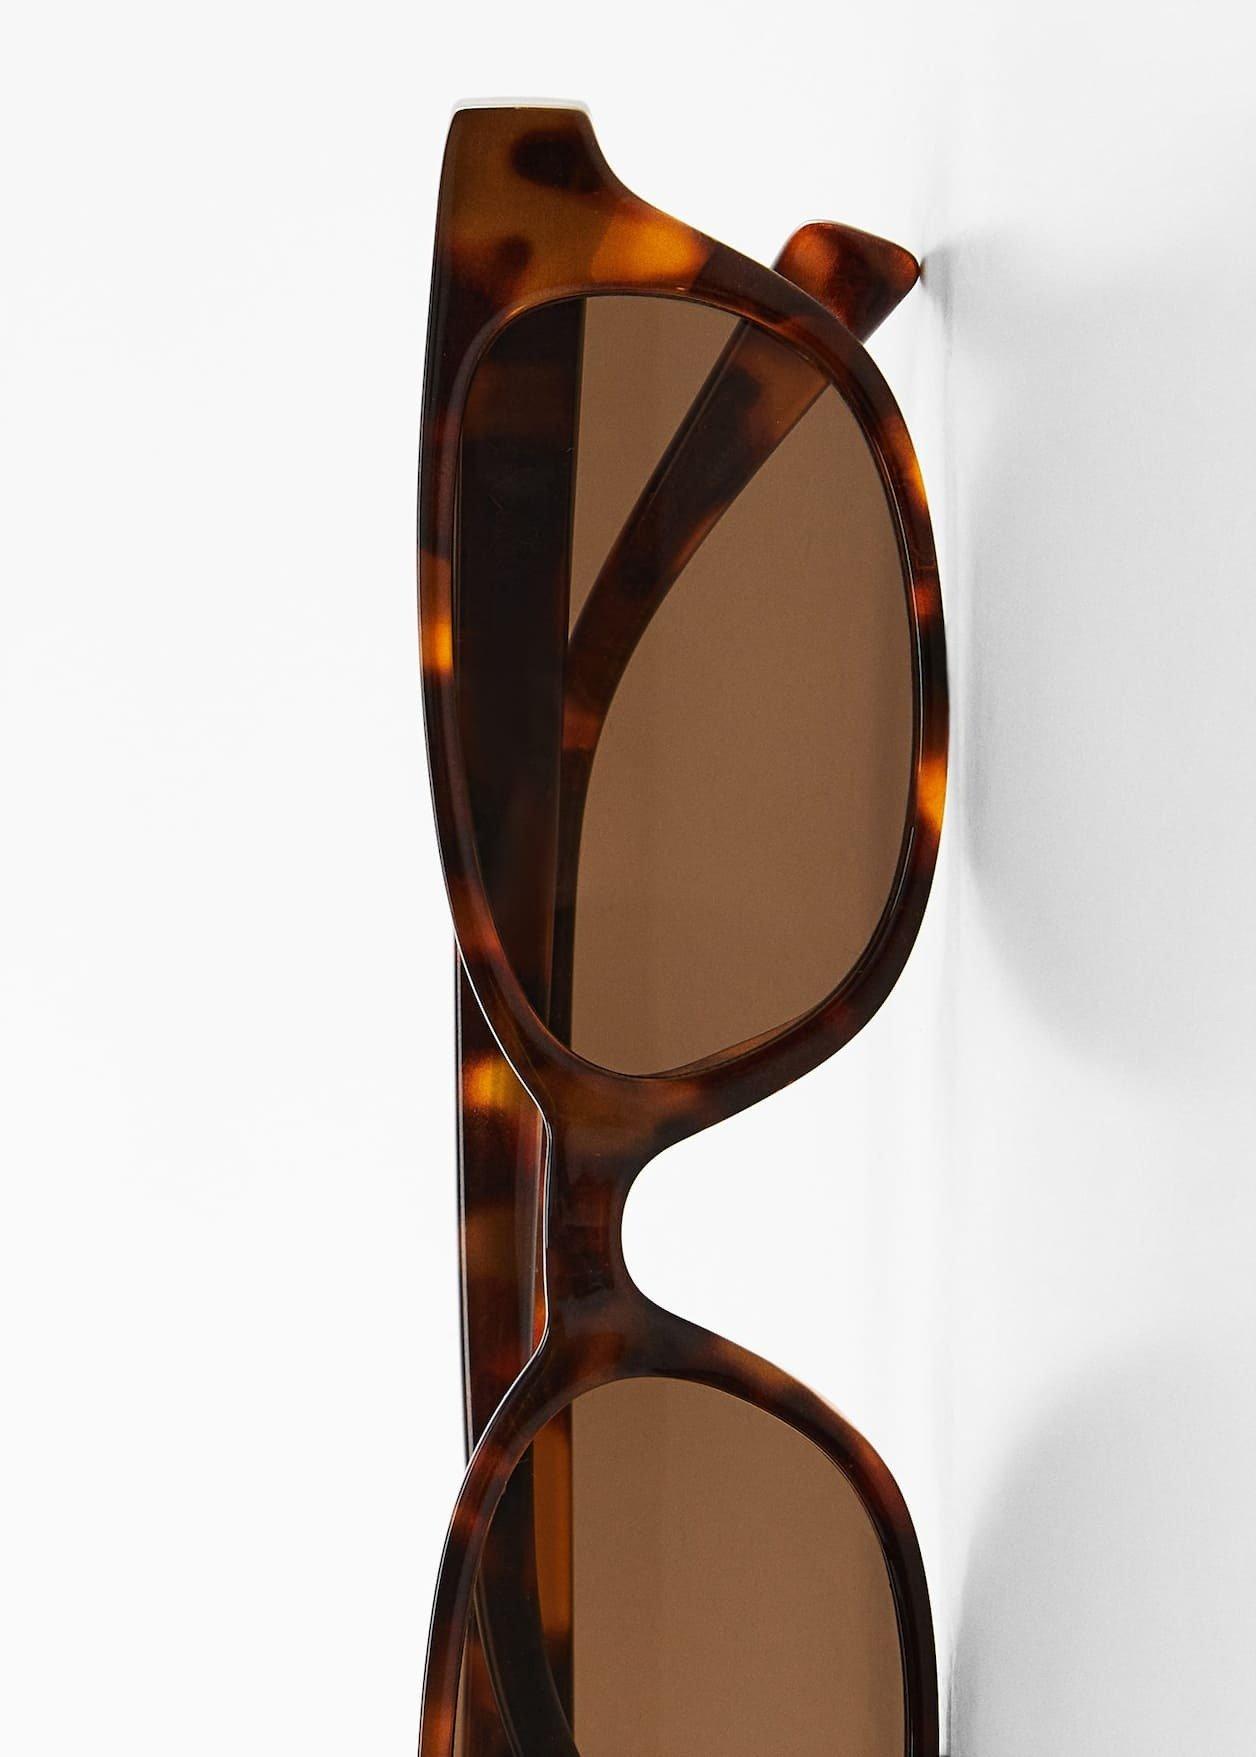 Mango - Brown Retro Style Sunglasses